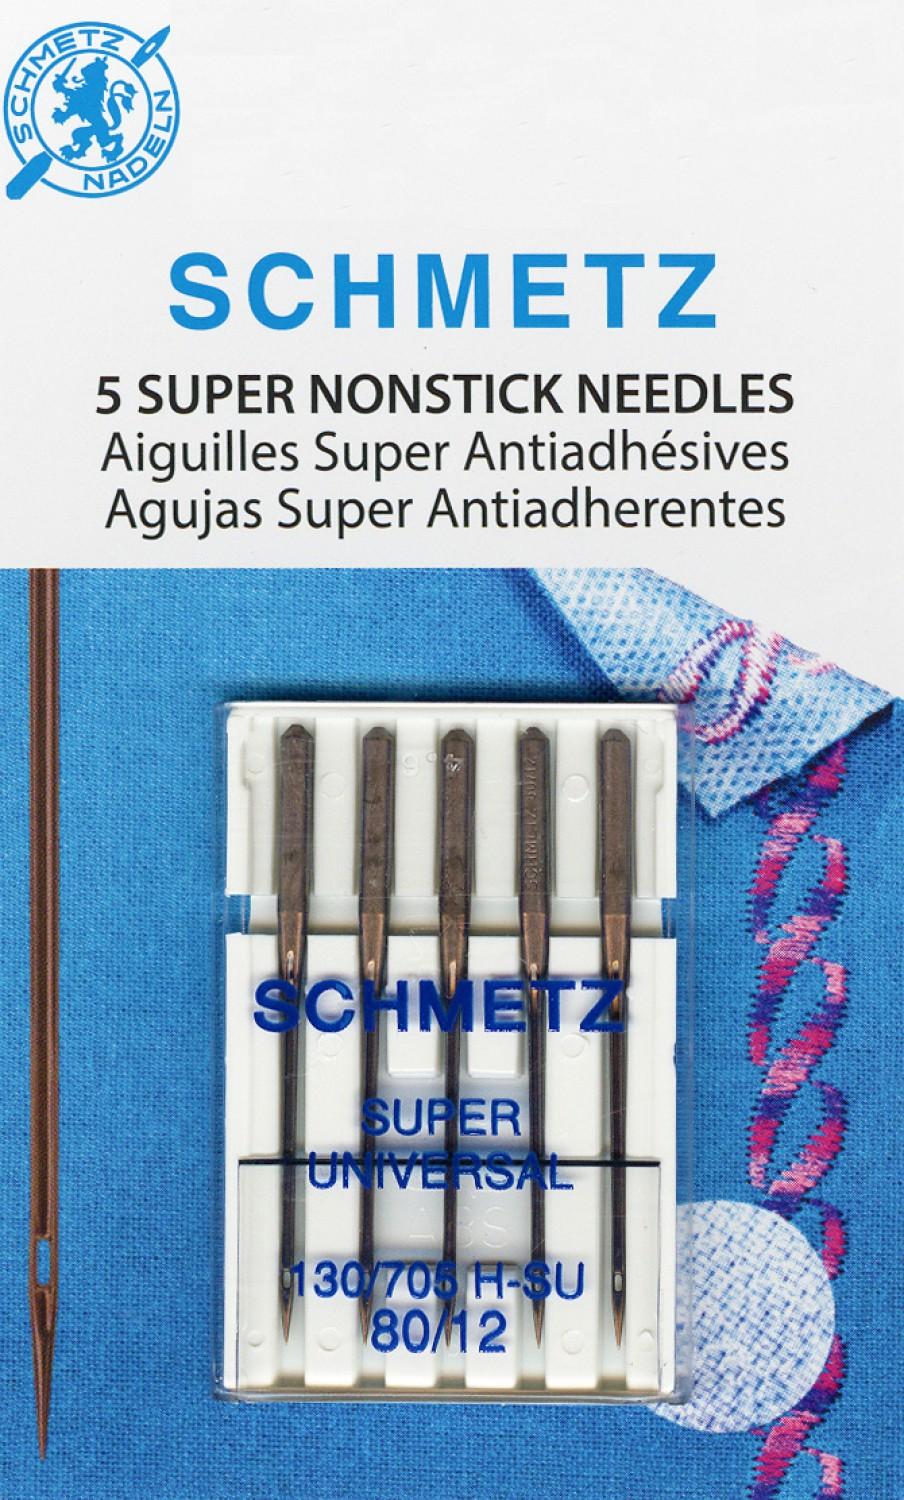 Schmetz Super Nonstick Needle 5ct, Size 80/12 # 4502